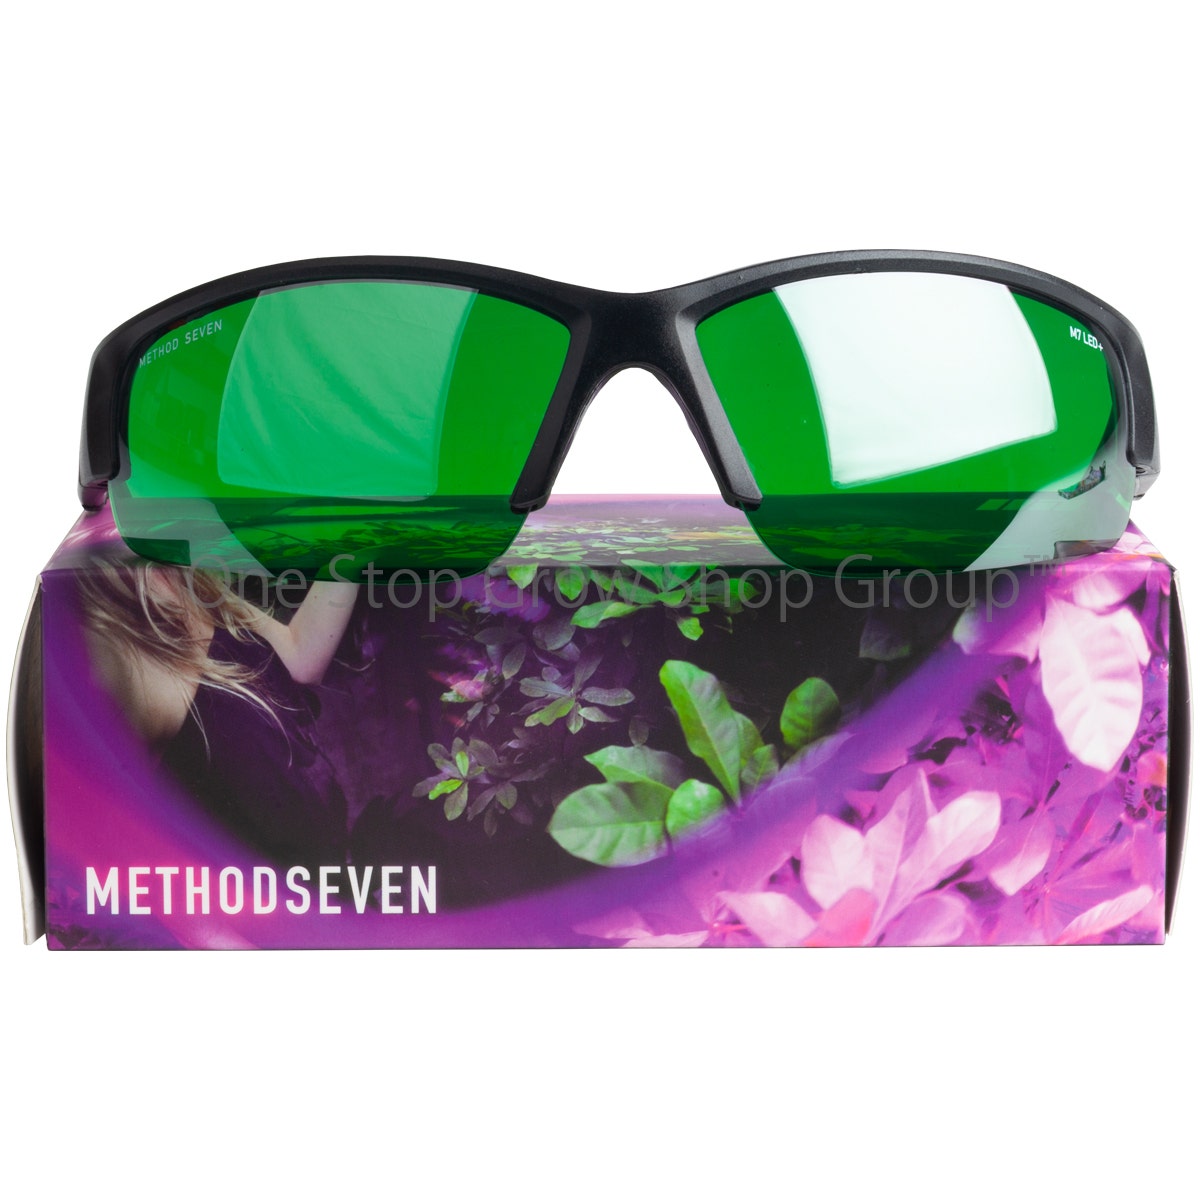 Method Seven - Grow Room Glasses